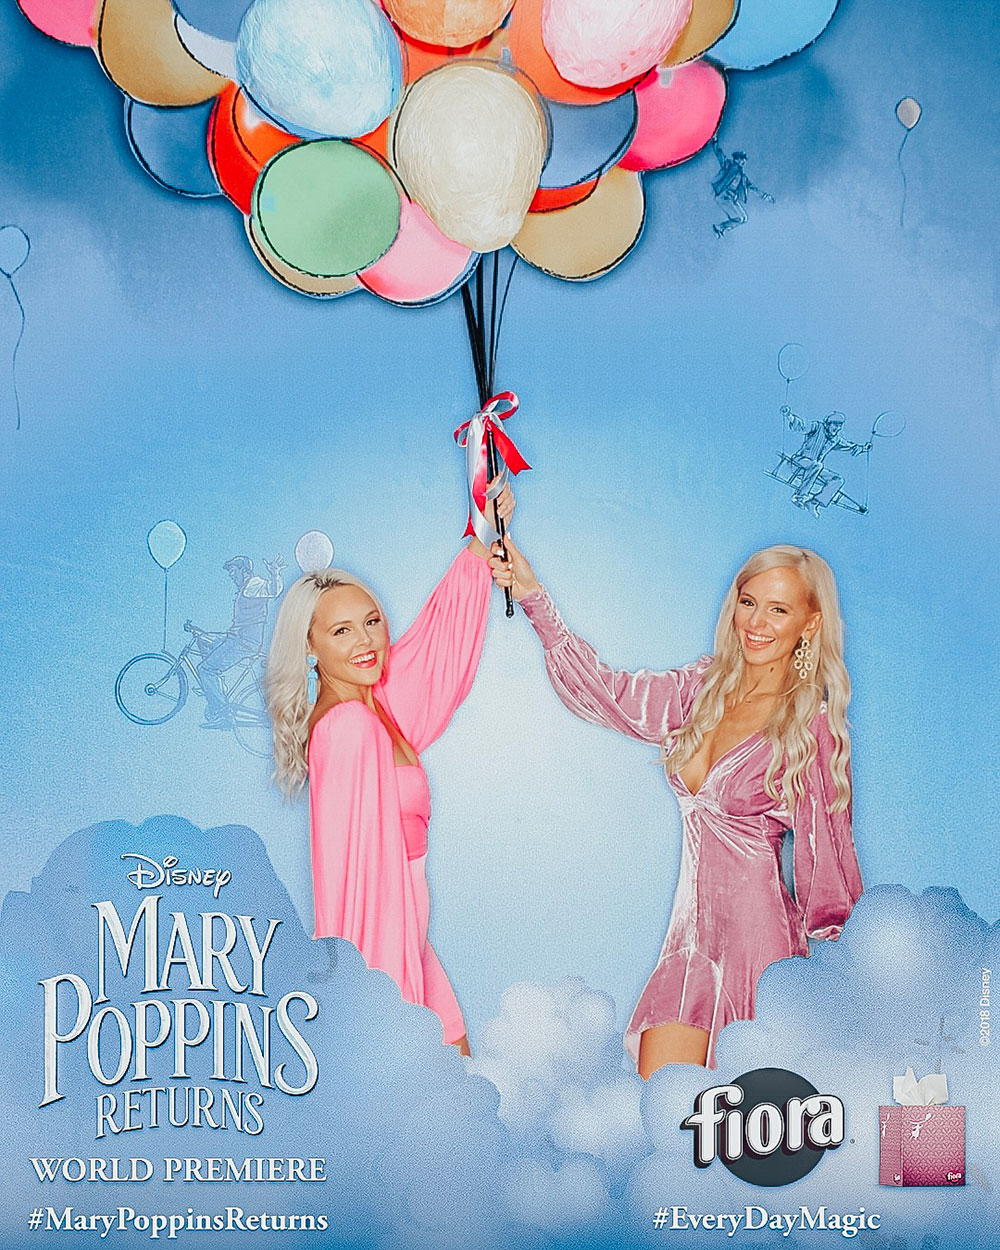 red carpet premiere disney mary poppins returns